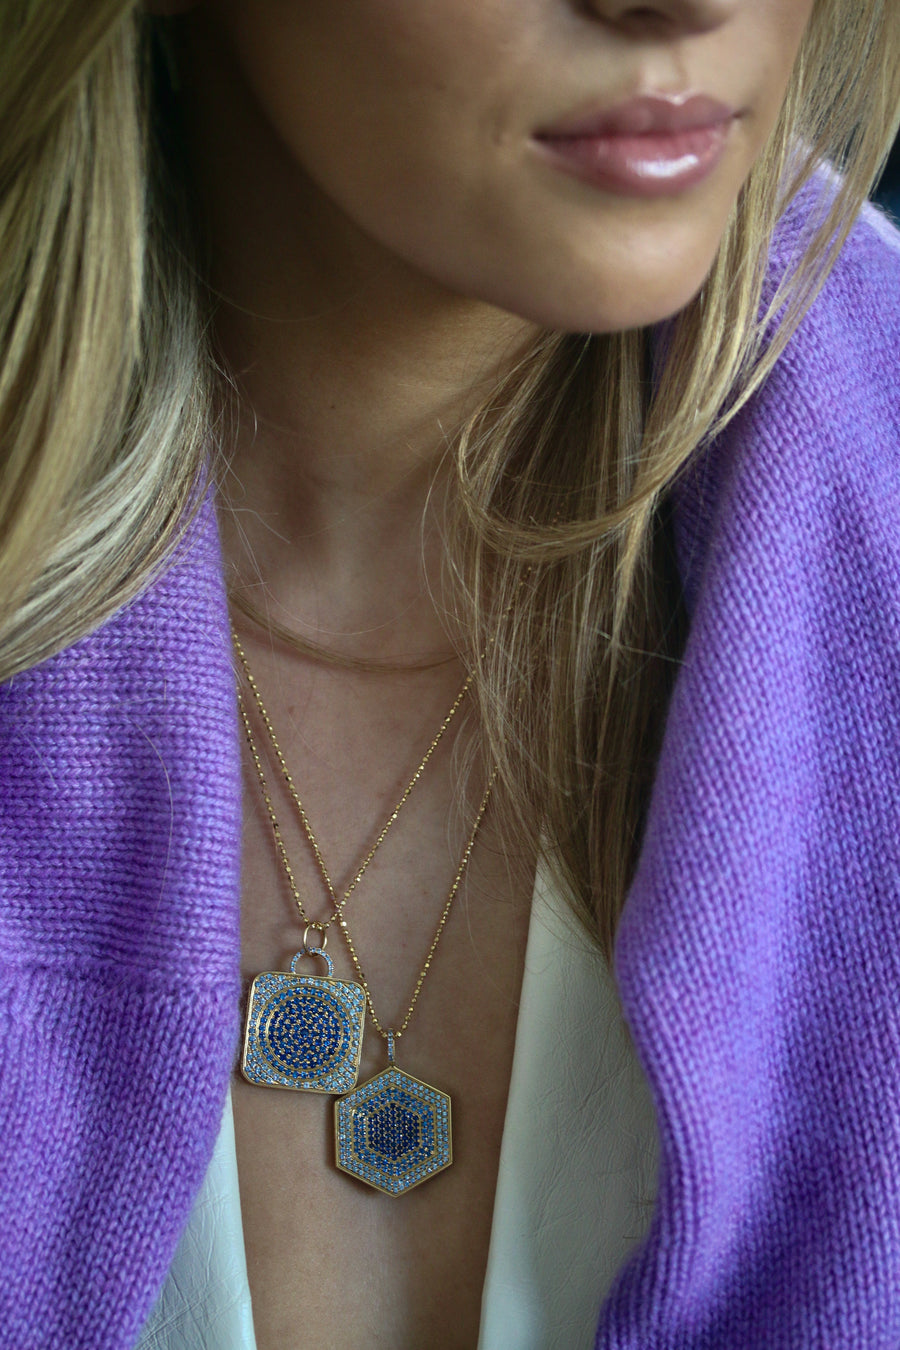 18k gold and blue sapphire square locket pendant